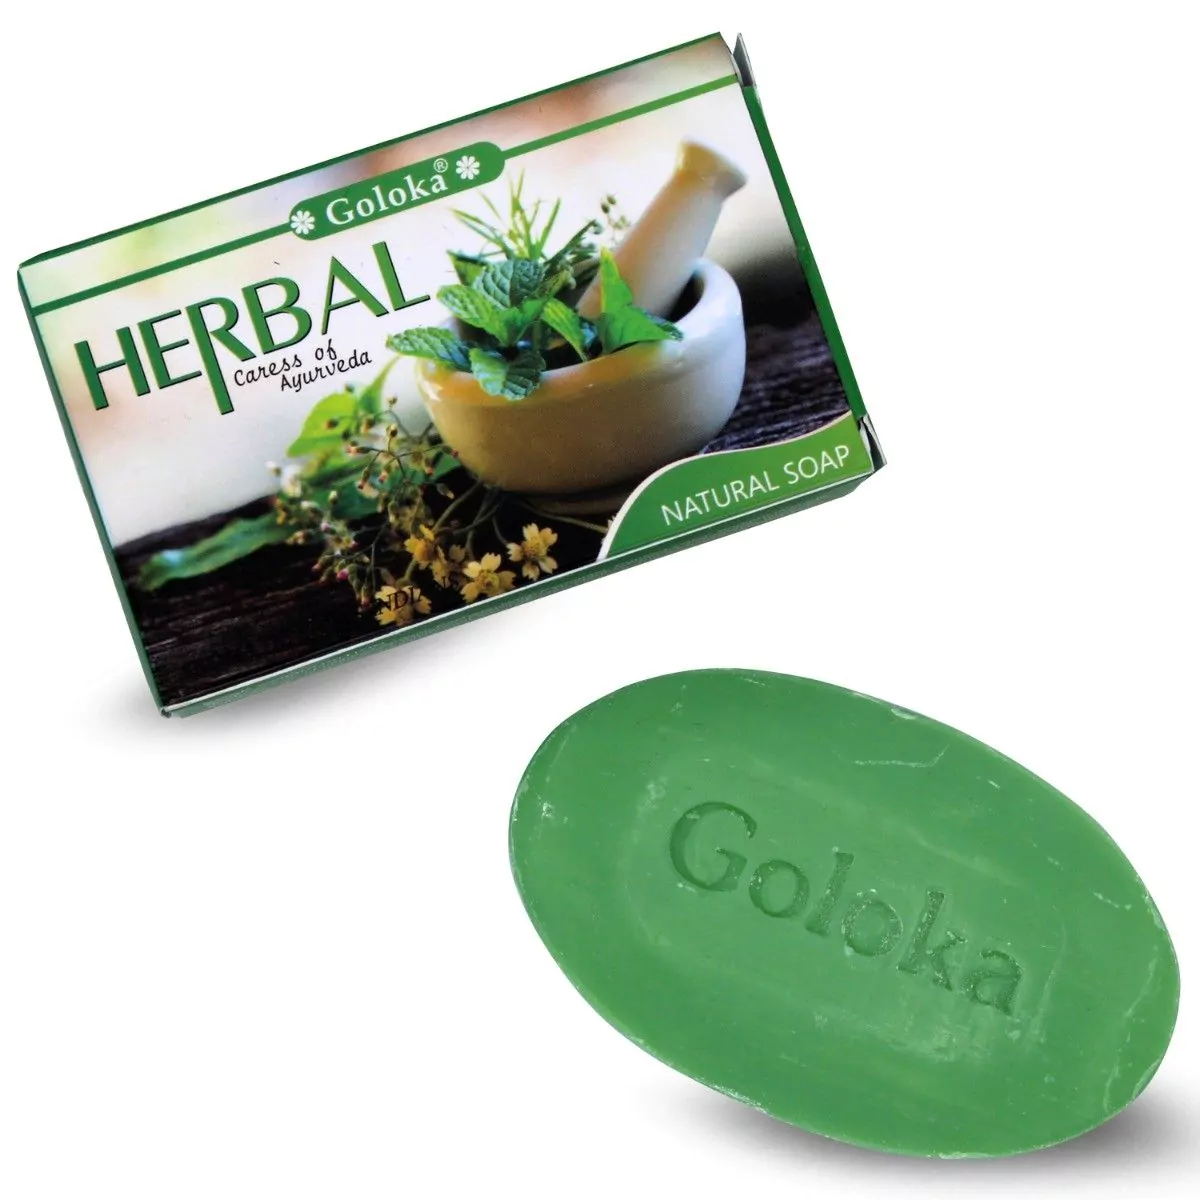 Goloka Herbal Natural Soap, Handtvål 75g, Goloka